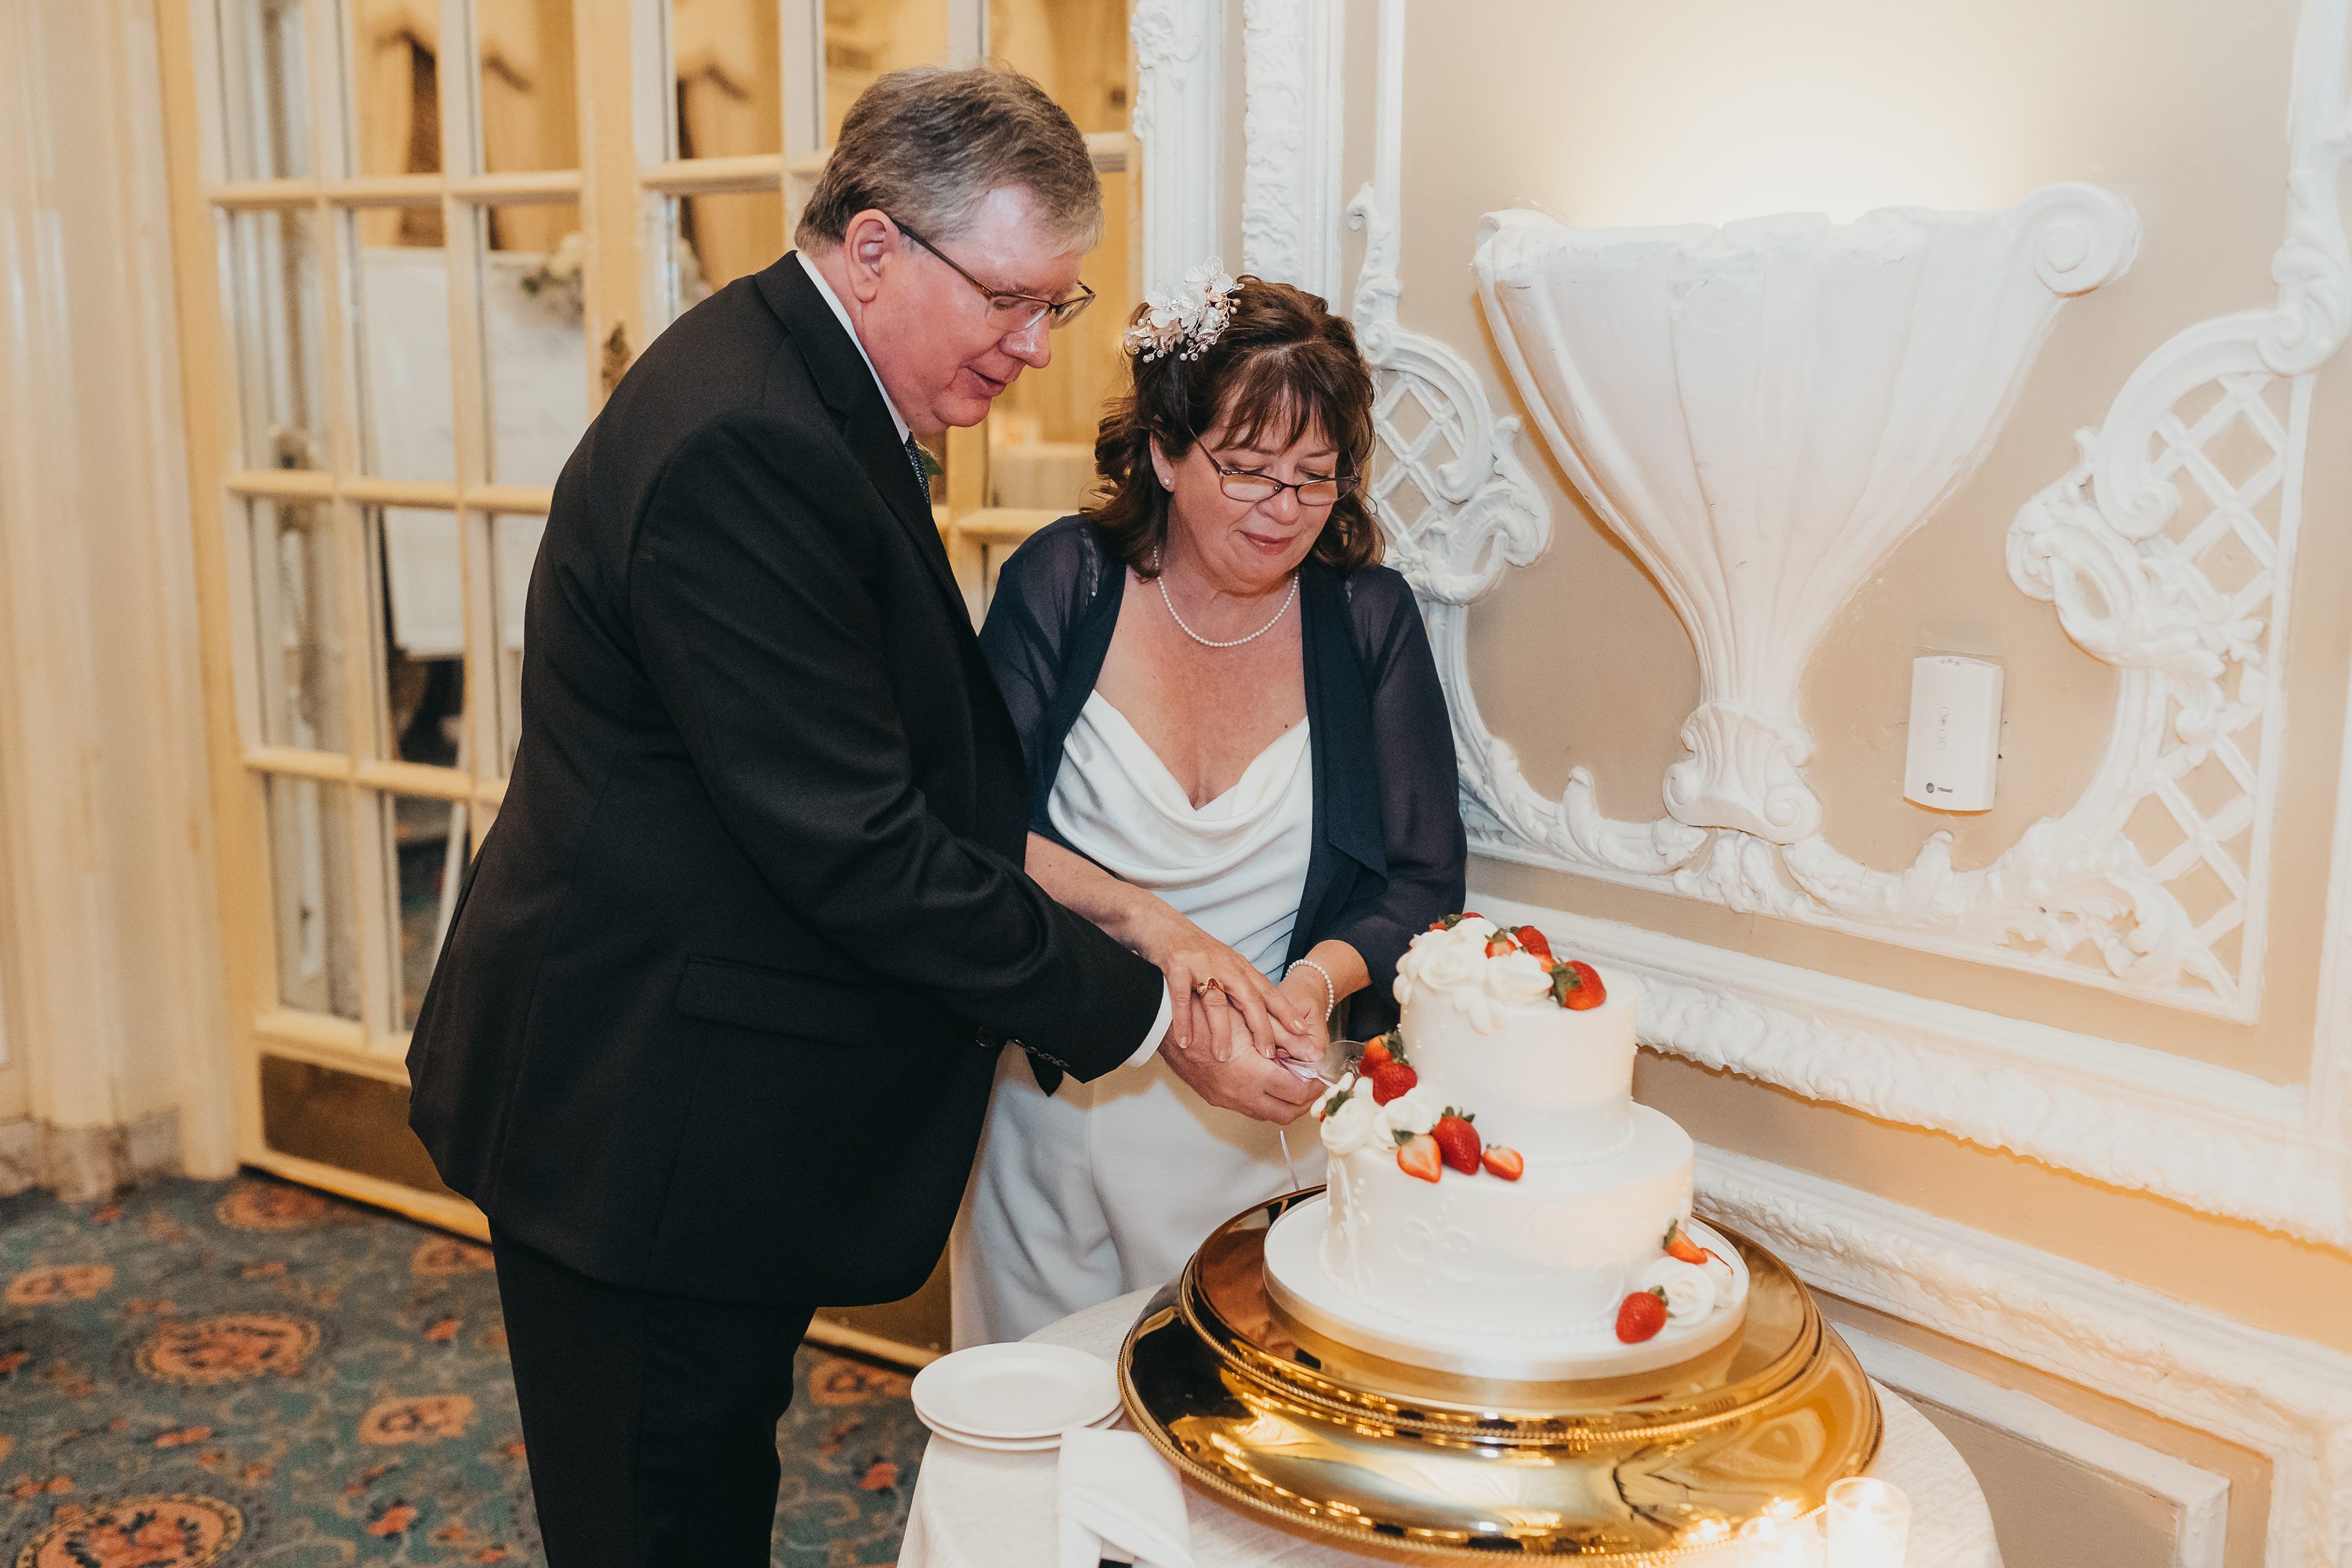 covid wedding,2020 wedding,dessert works bakery boston,couple cutting wedding cake